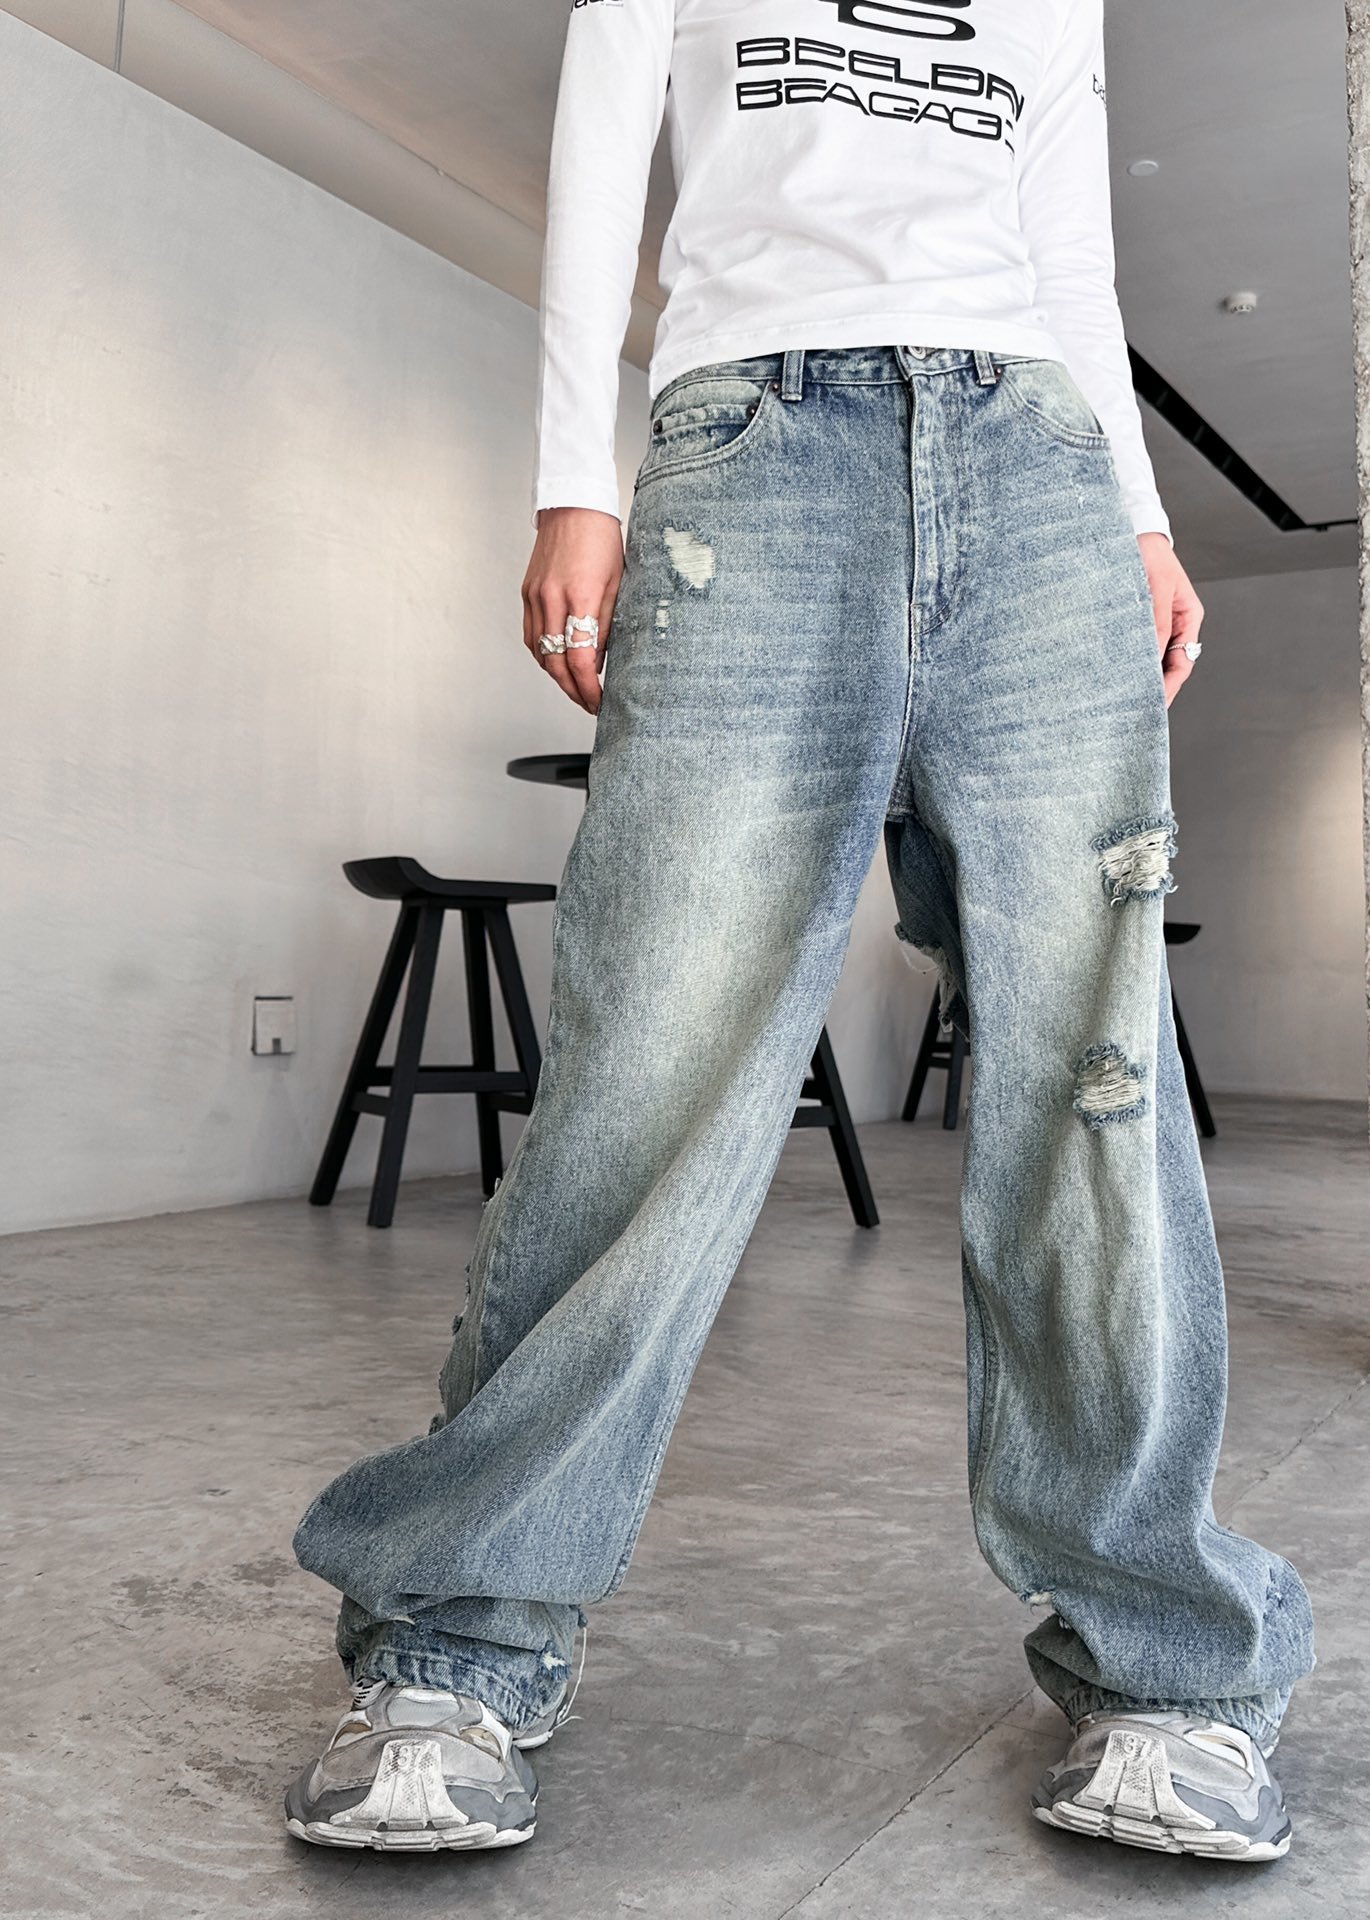 NEW新款牛仔裤纯棉牛仔面料整身做旧水洗蓝色复古时尚背部重度破坏割破设计区别于原版过于夸张的破洞做了调整